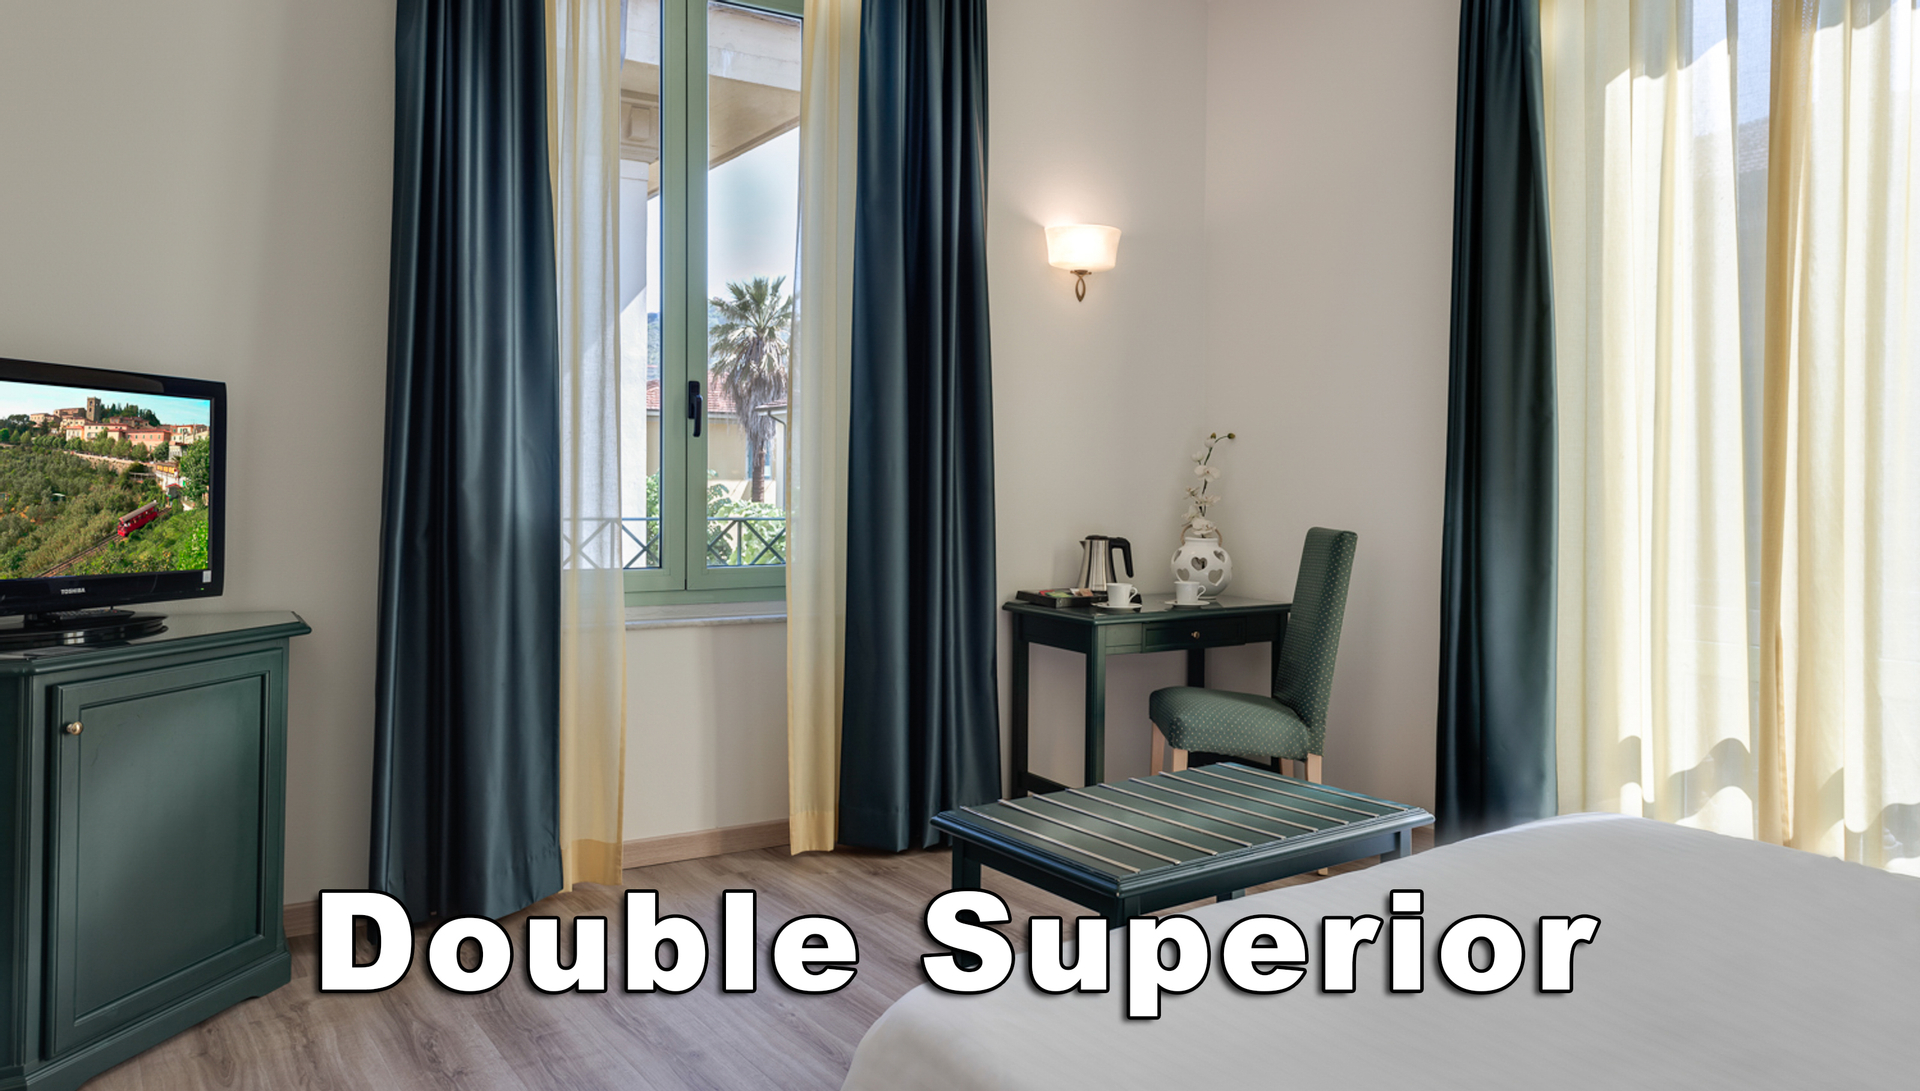 Double Superior Room